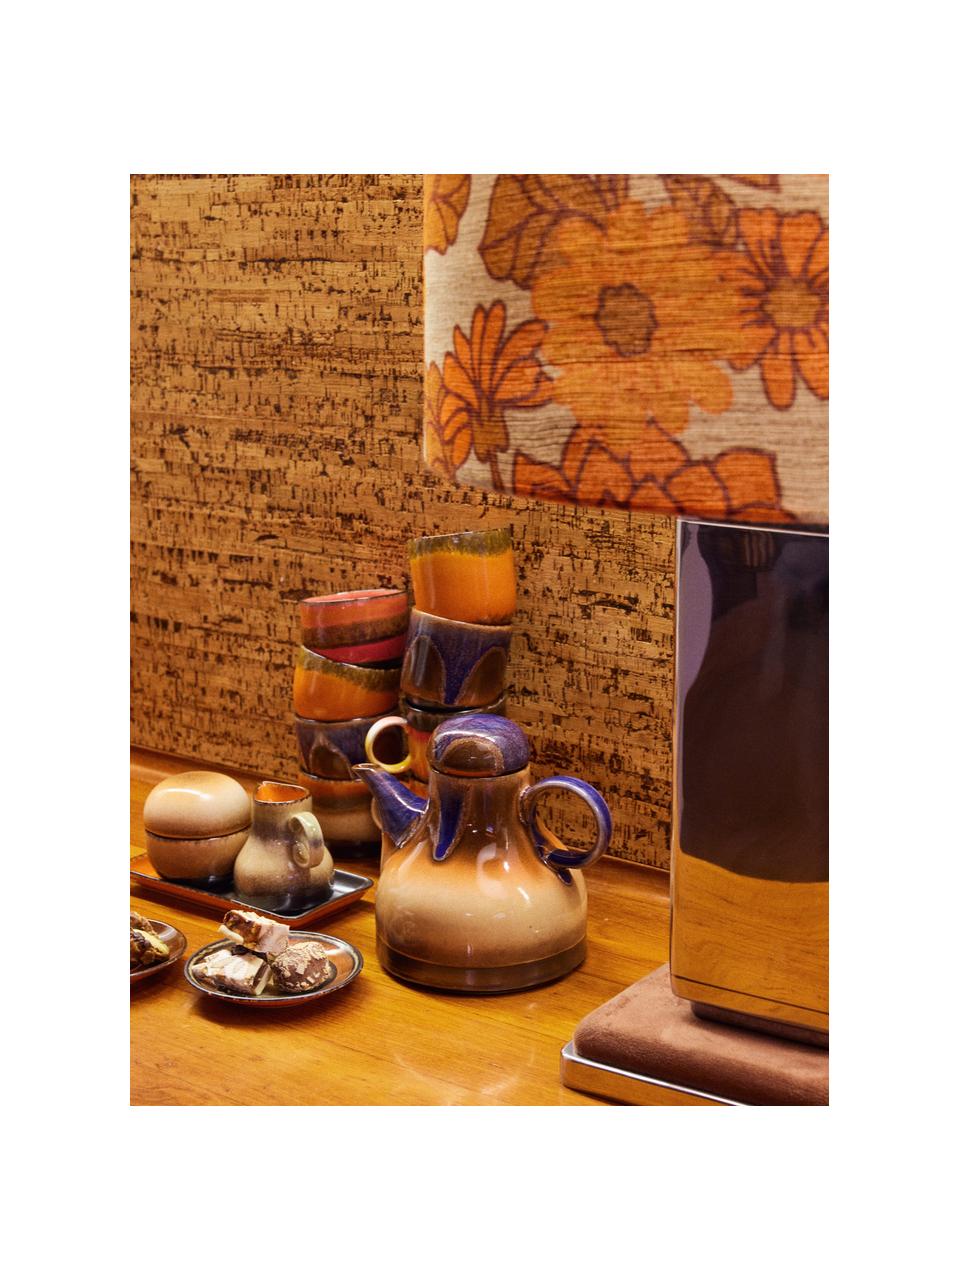 Set di 4 tazze senza manico in ceramica fatte a mano 70's, Ceramica, Multicolore, Ø 8 x Alt. 7 cm, 230 ml